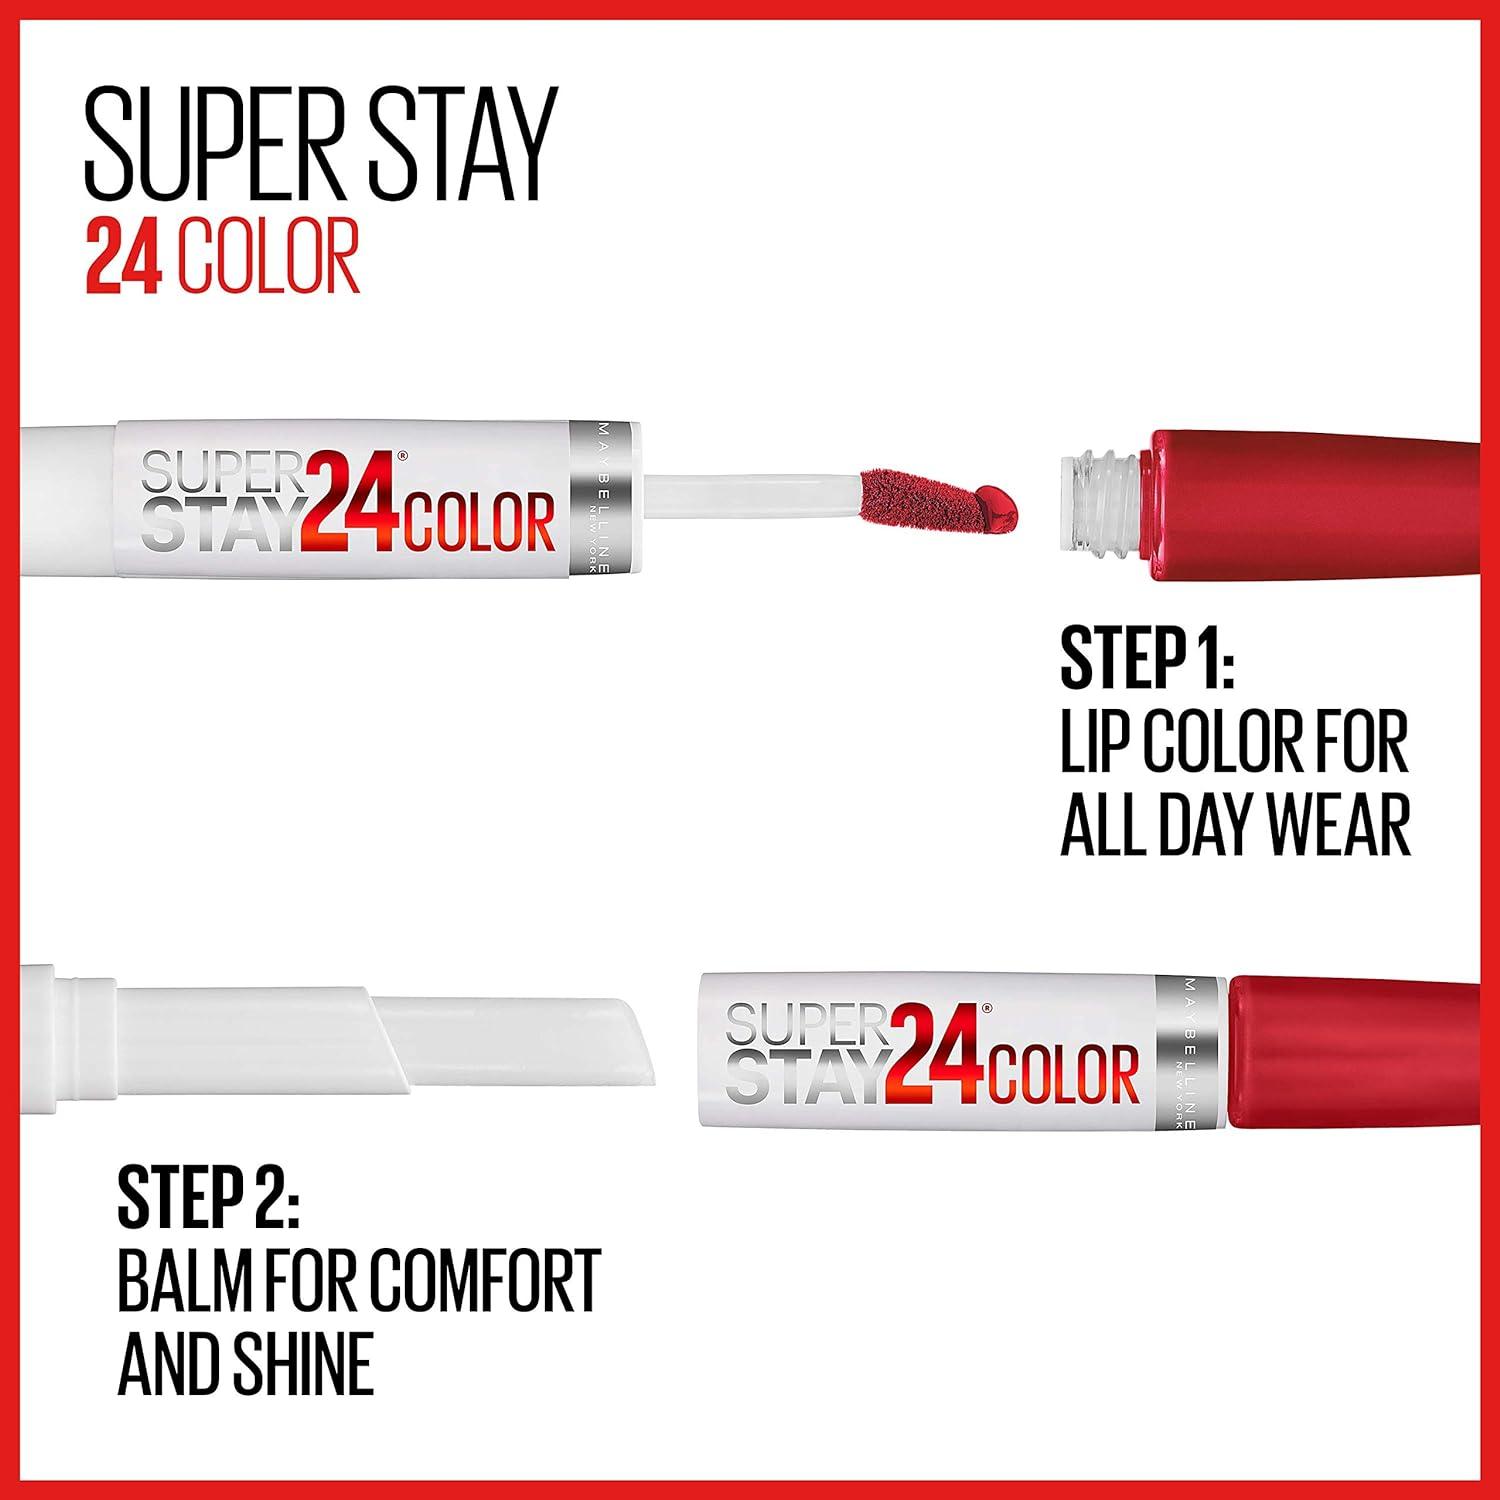 Maybelline SuperStay 24 2-Step Liquid Lipstick, Copper Glisten 